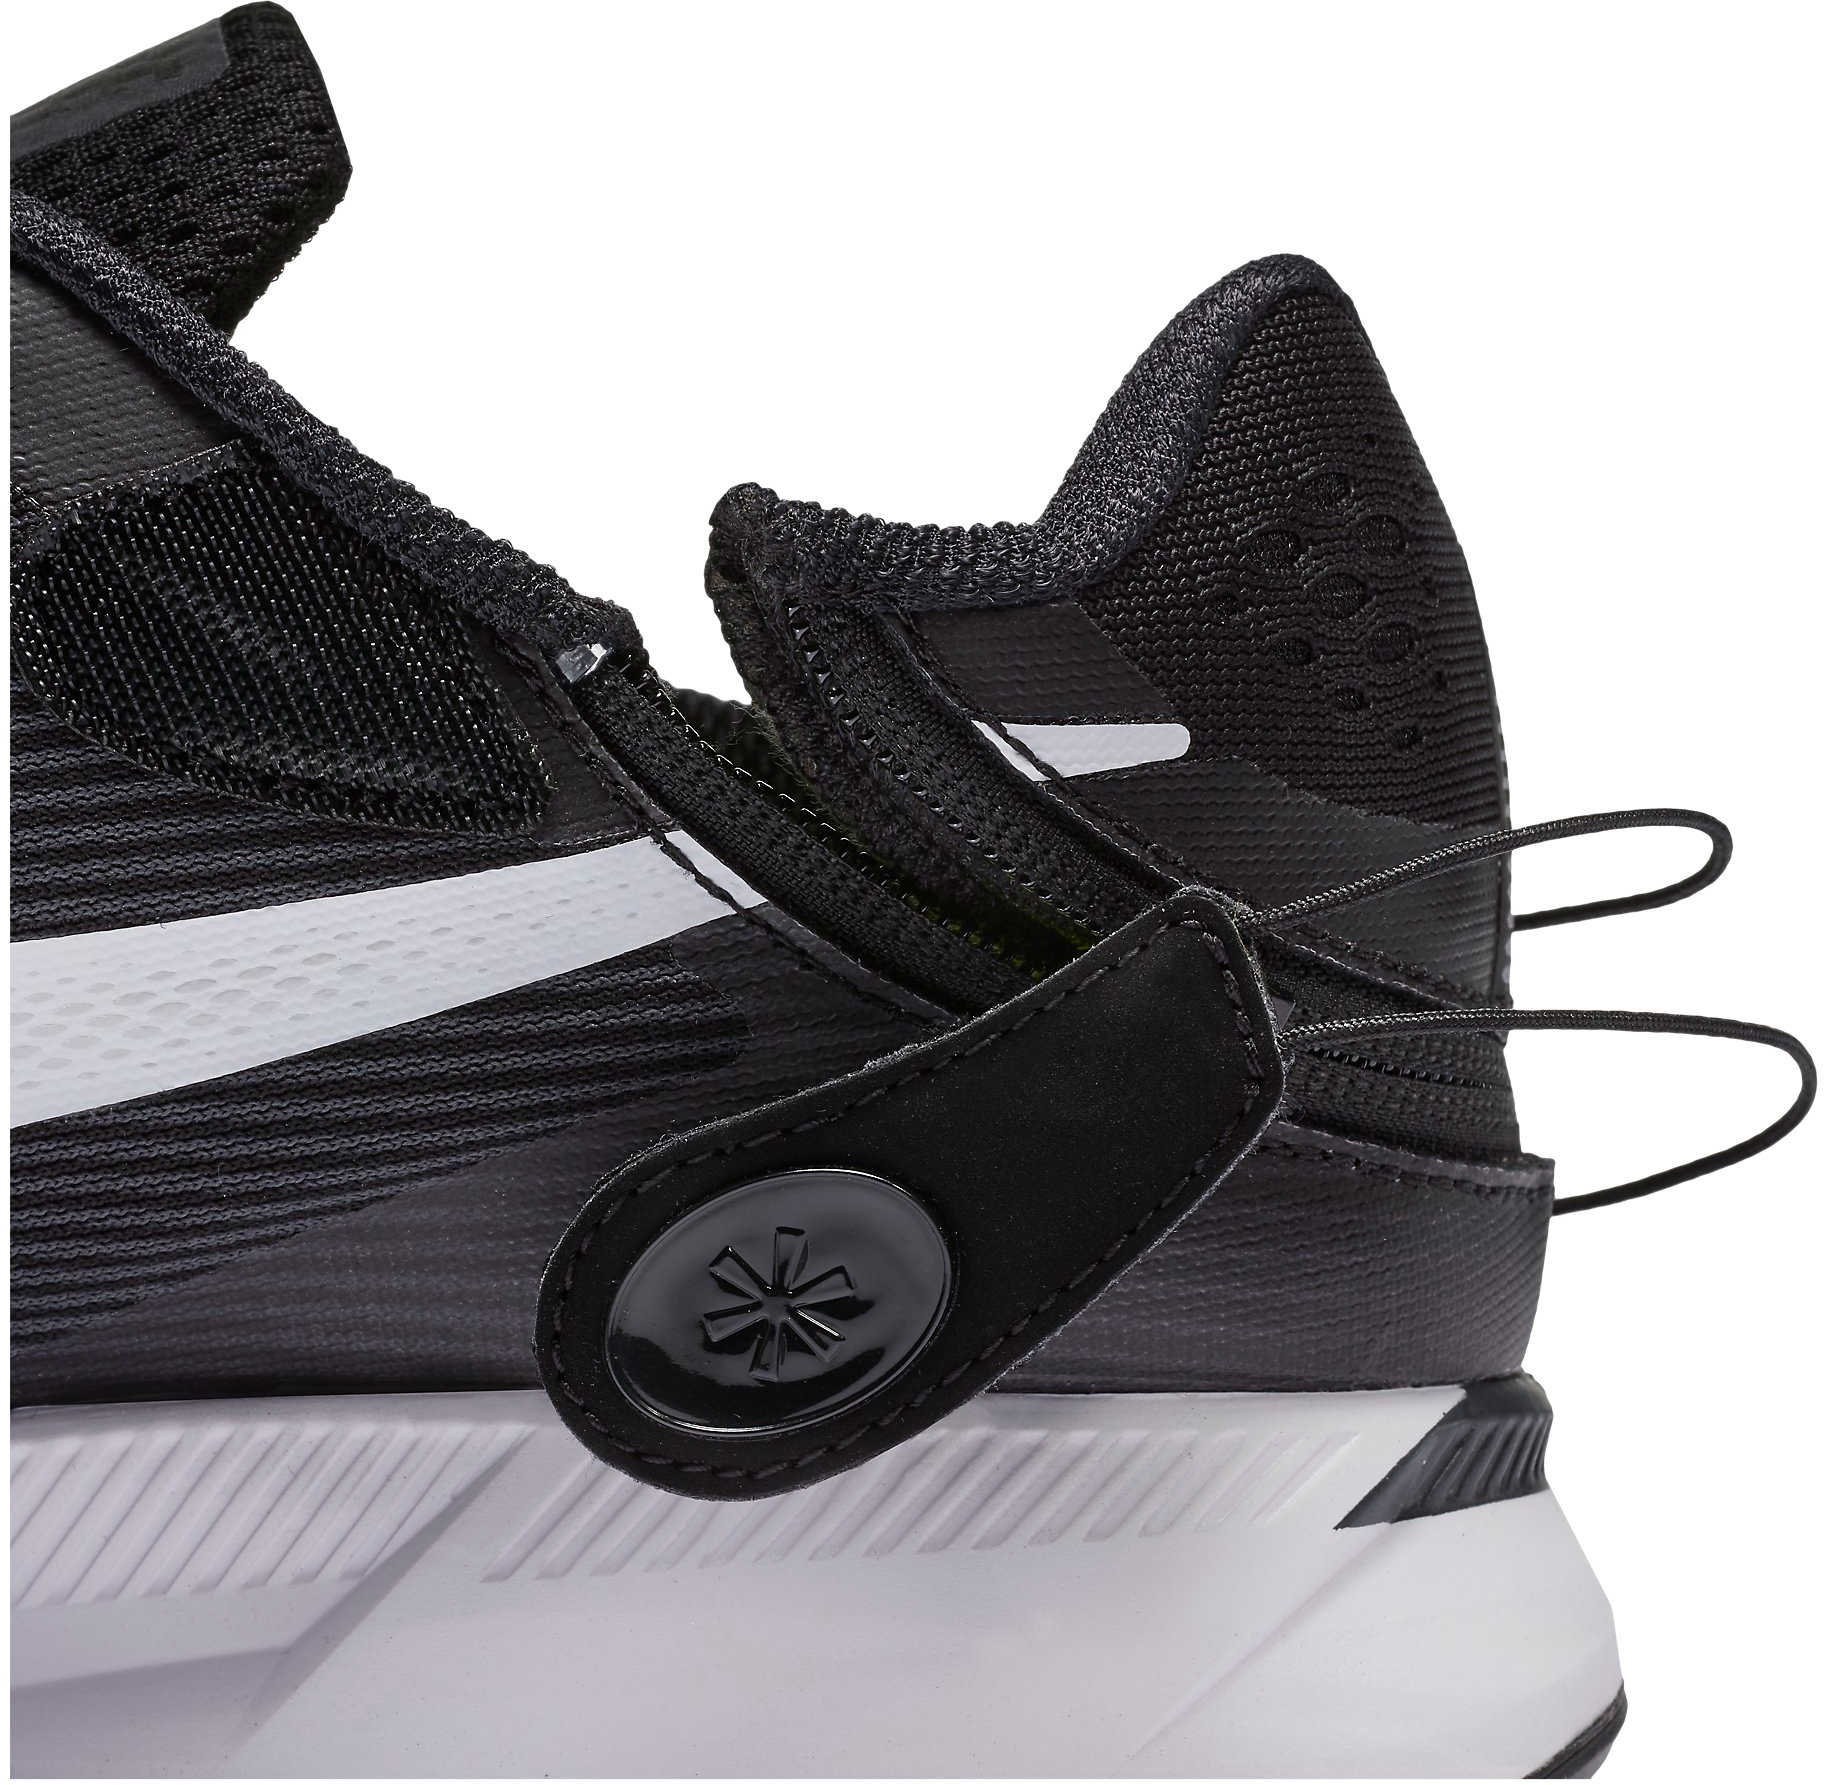 Running shoes Nike AIR ZOOM PEGASUS 34 